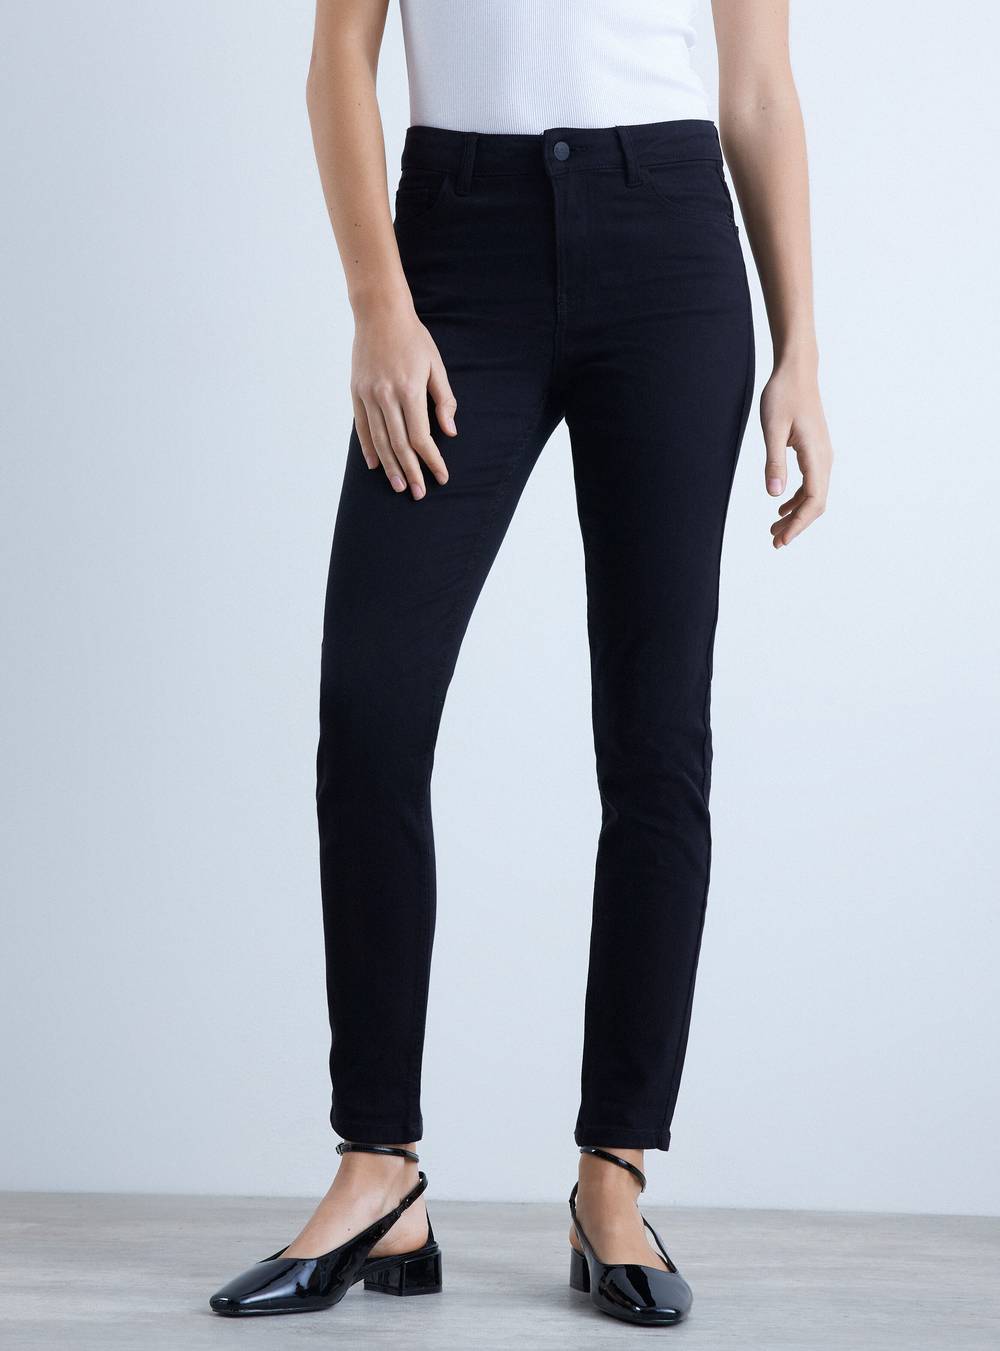 Alaniz jeans skinny liso básico negro 't 44